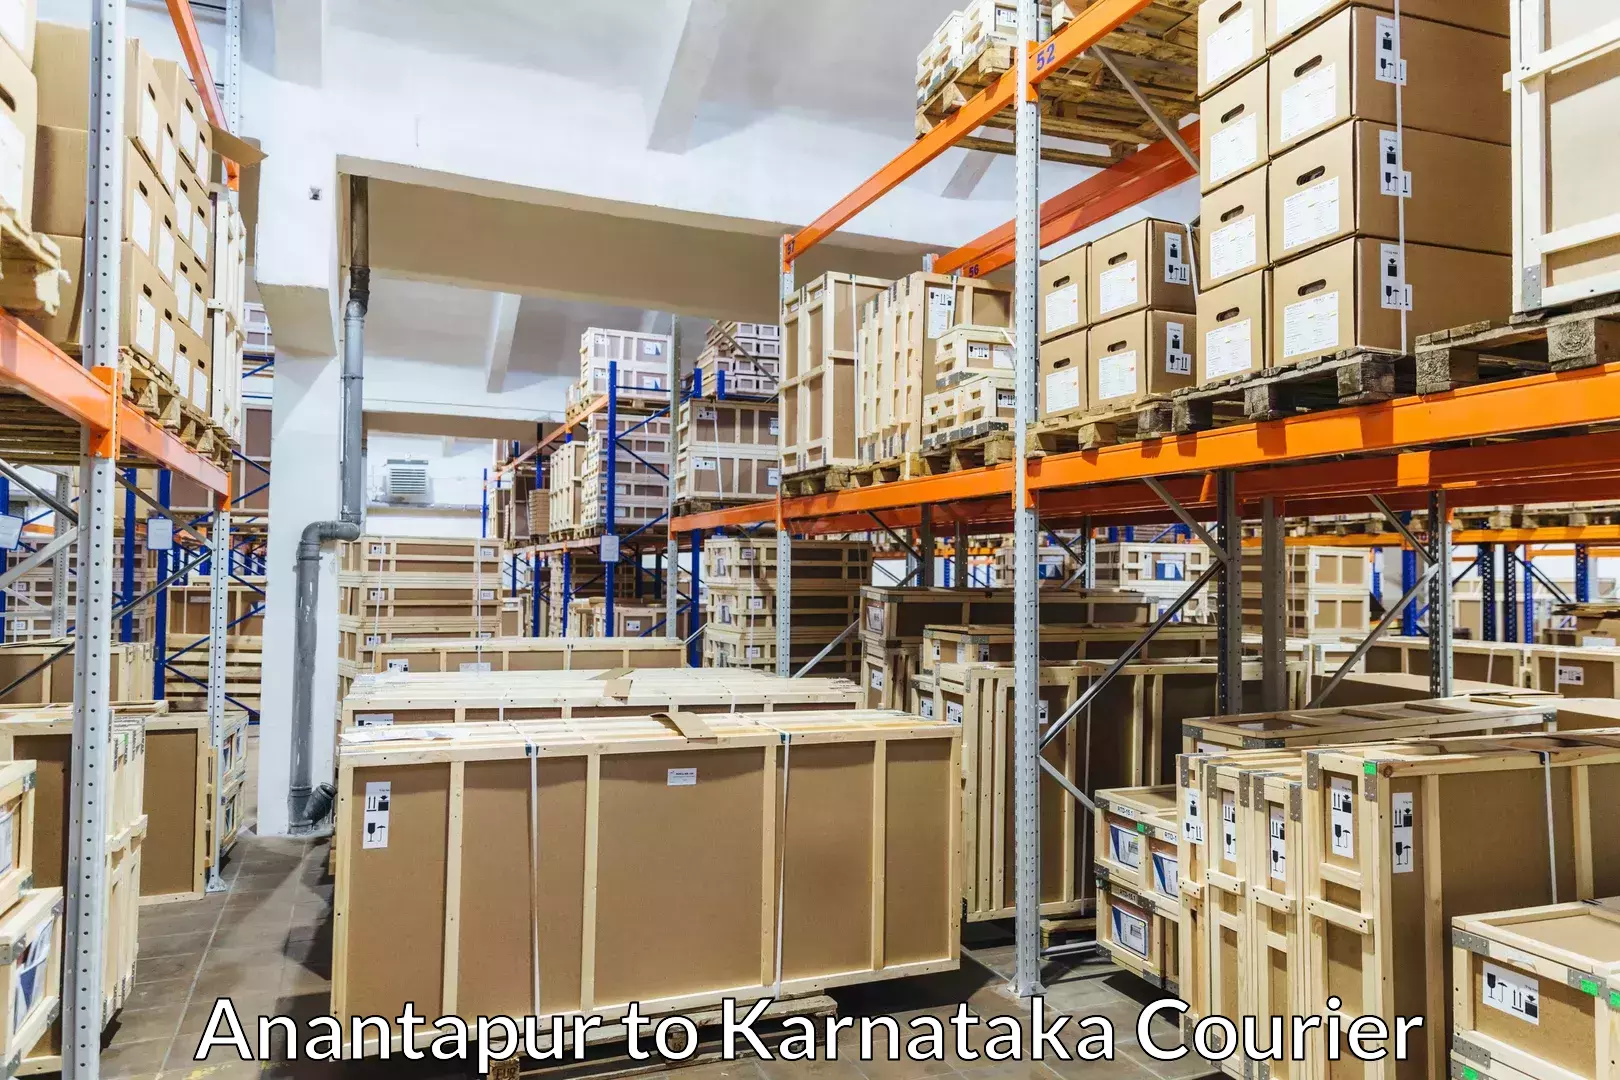 Moving and packing experts Anantapur to Karnataka